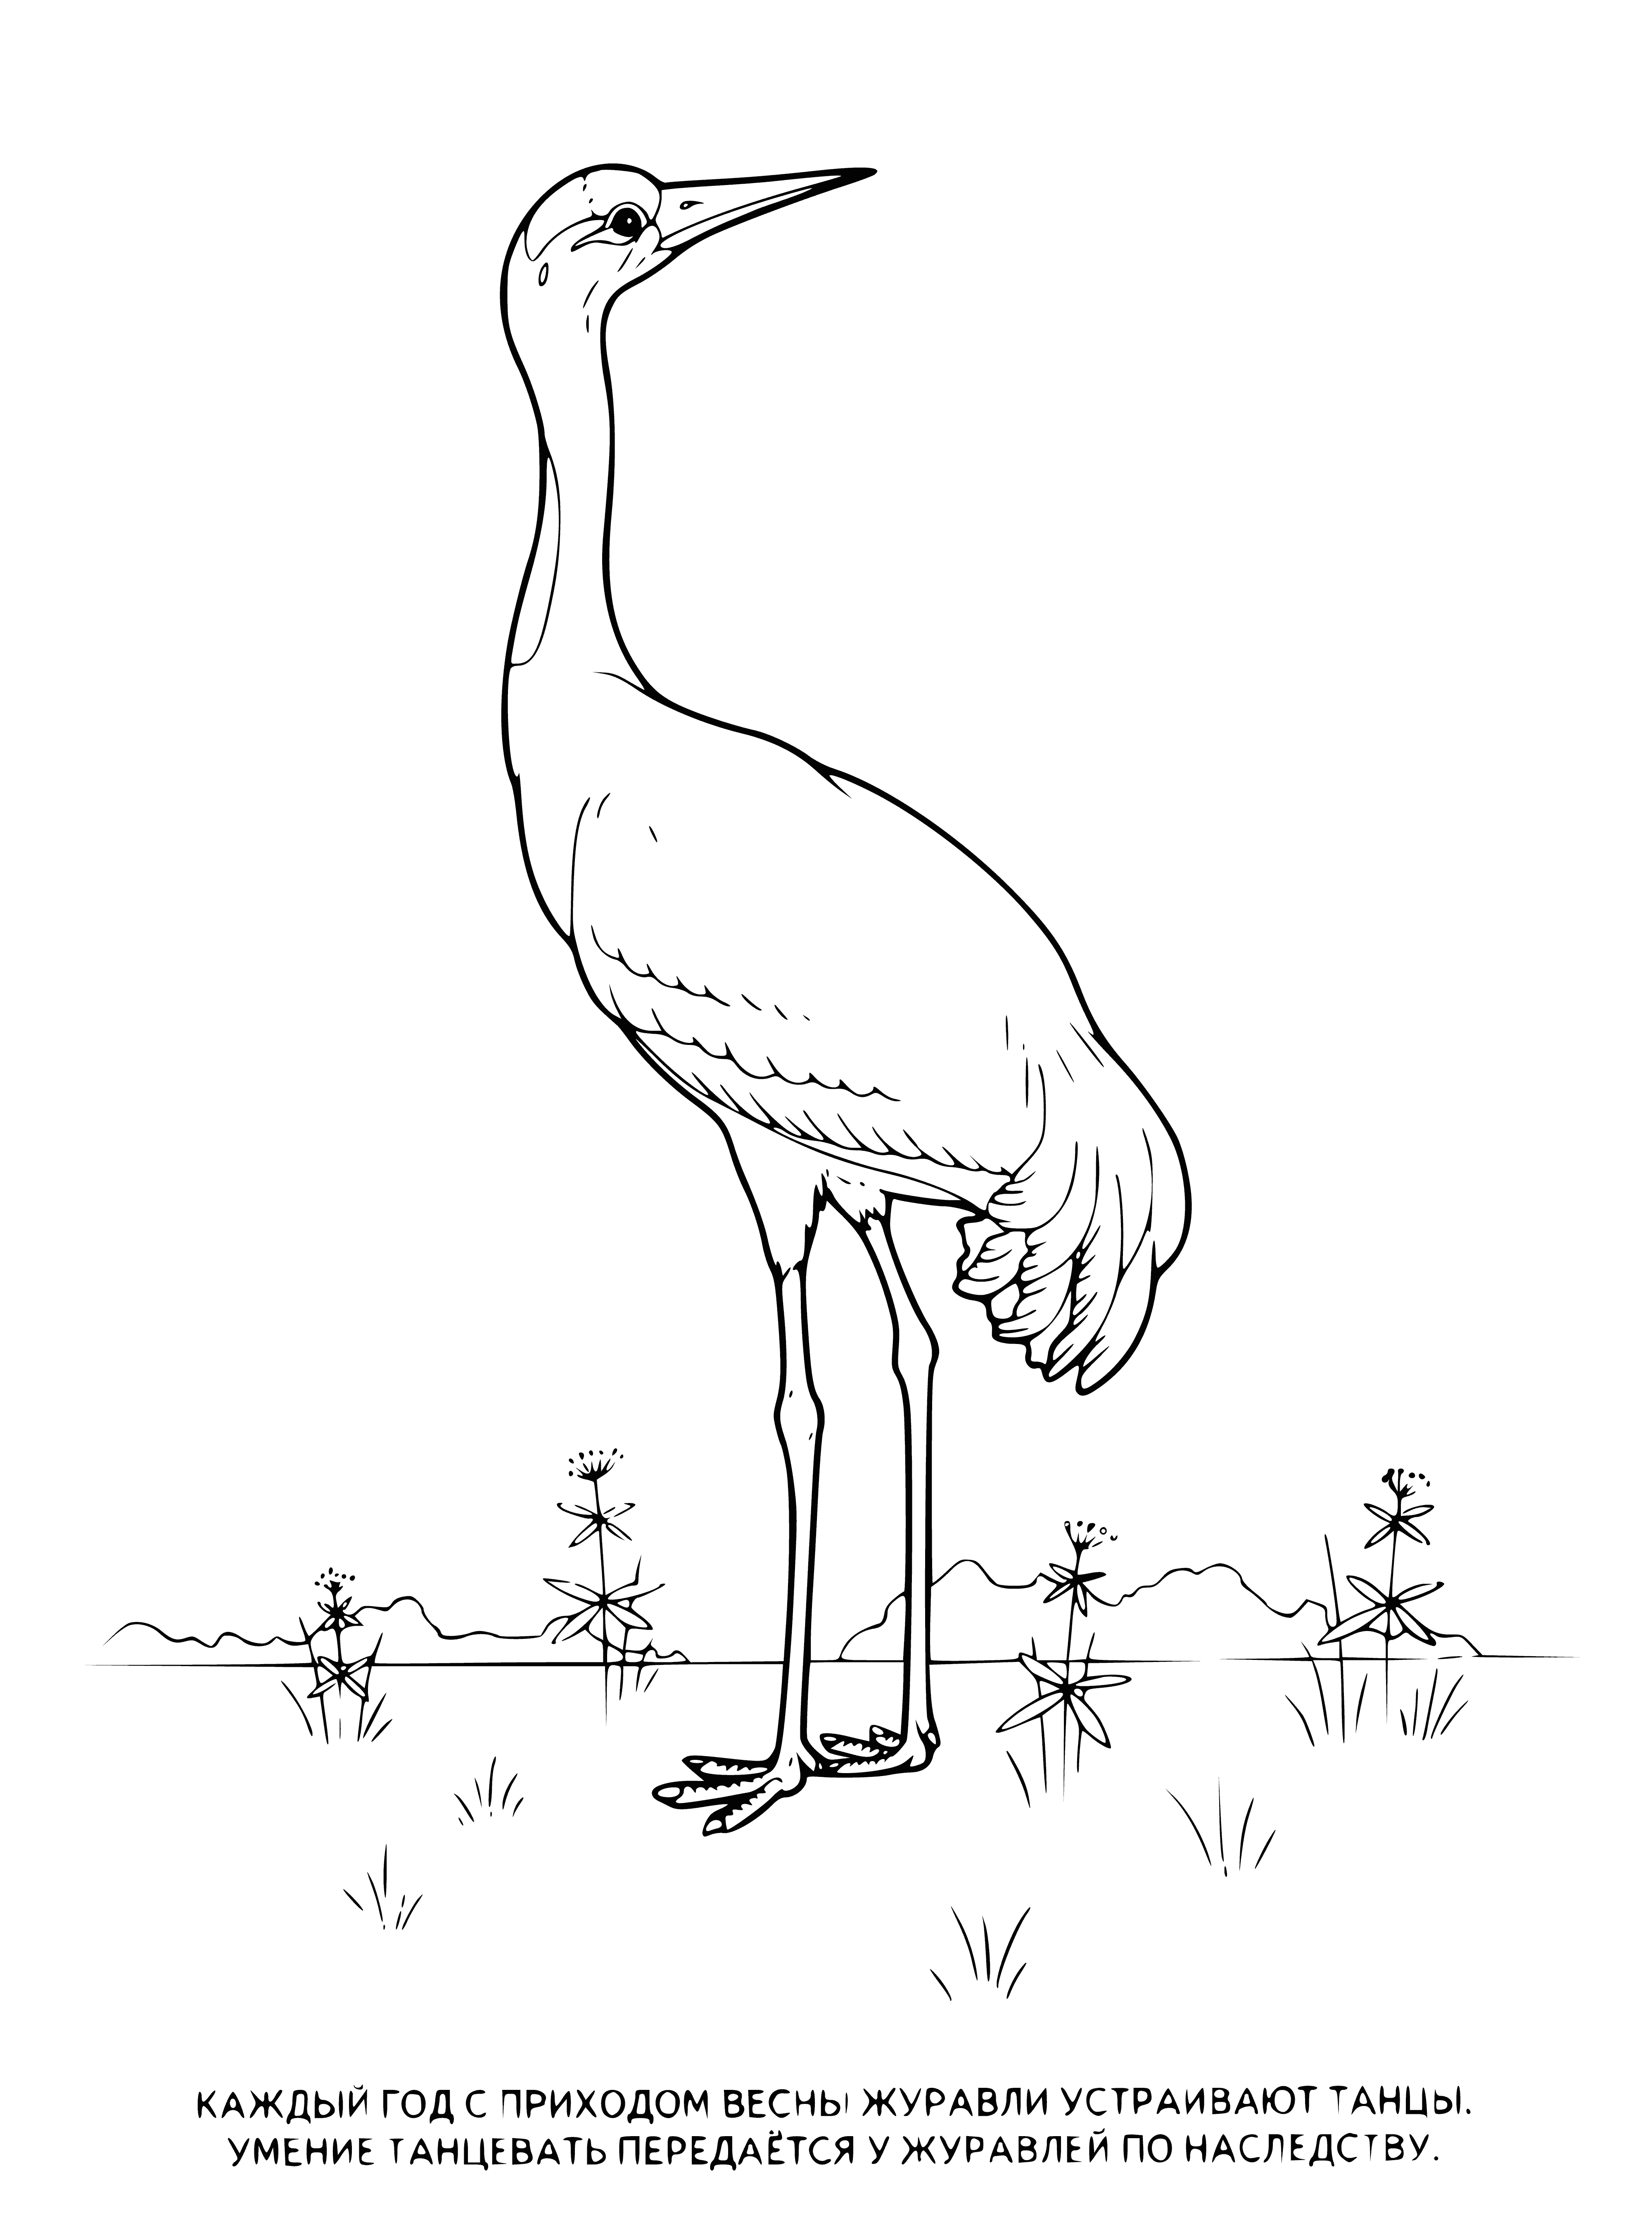 Crane coloring page